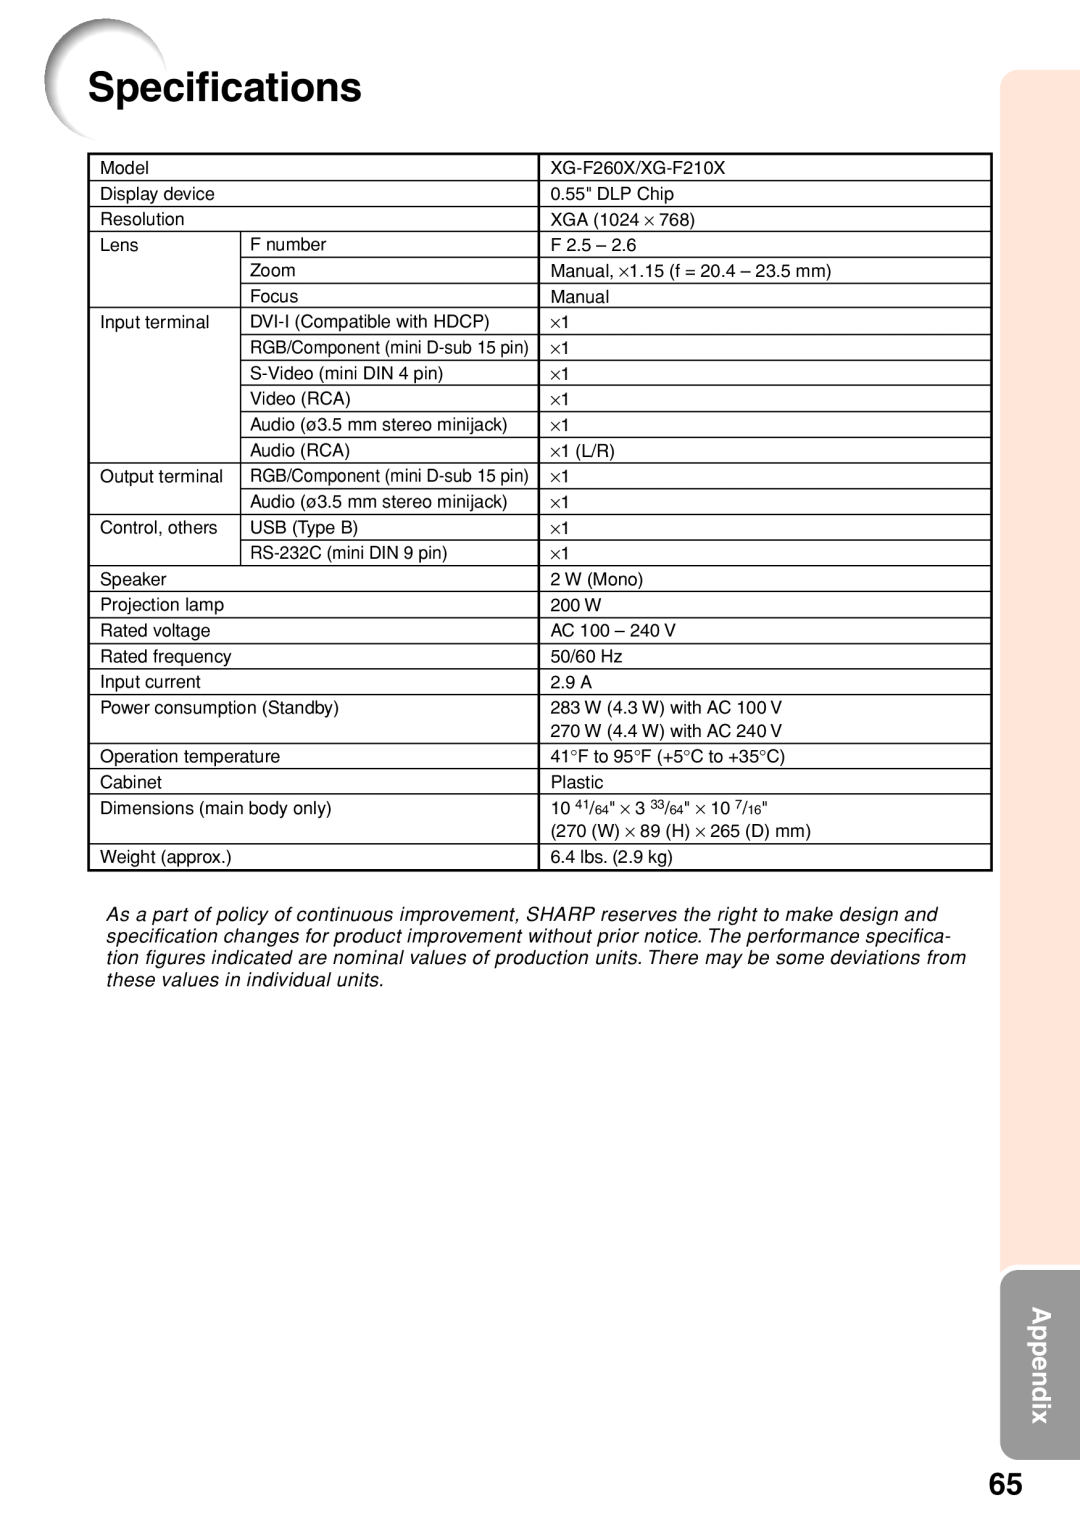 Sharp XG-F210X, XG-F260X operation manual Specifications, Appendix 